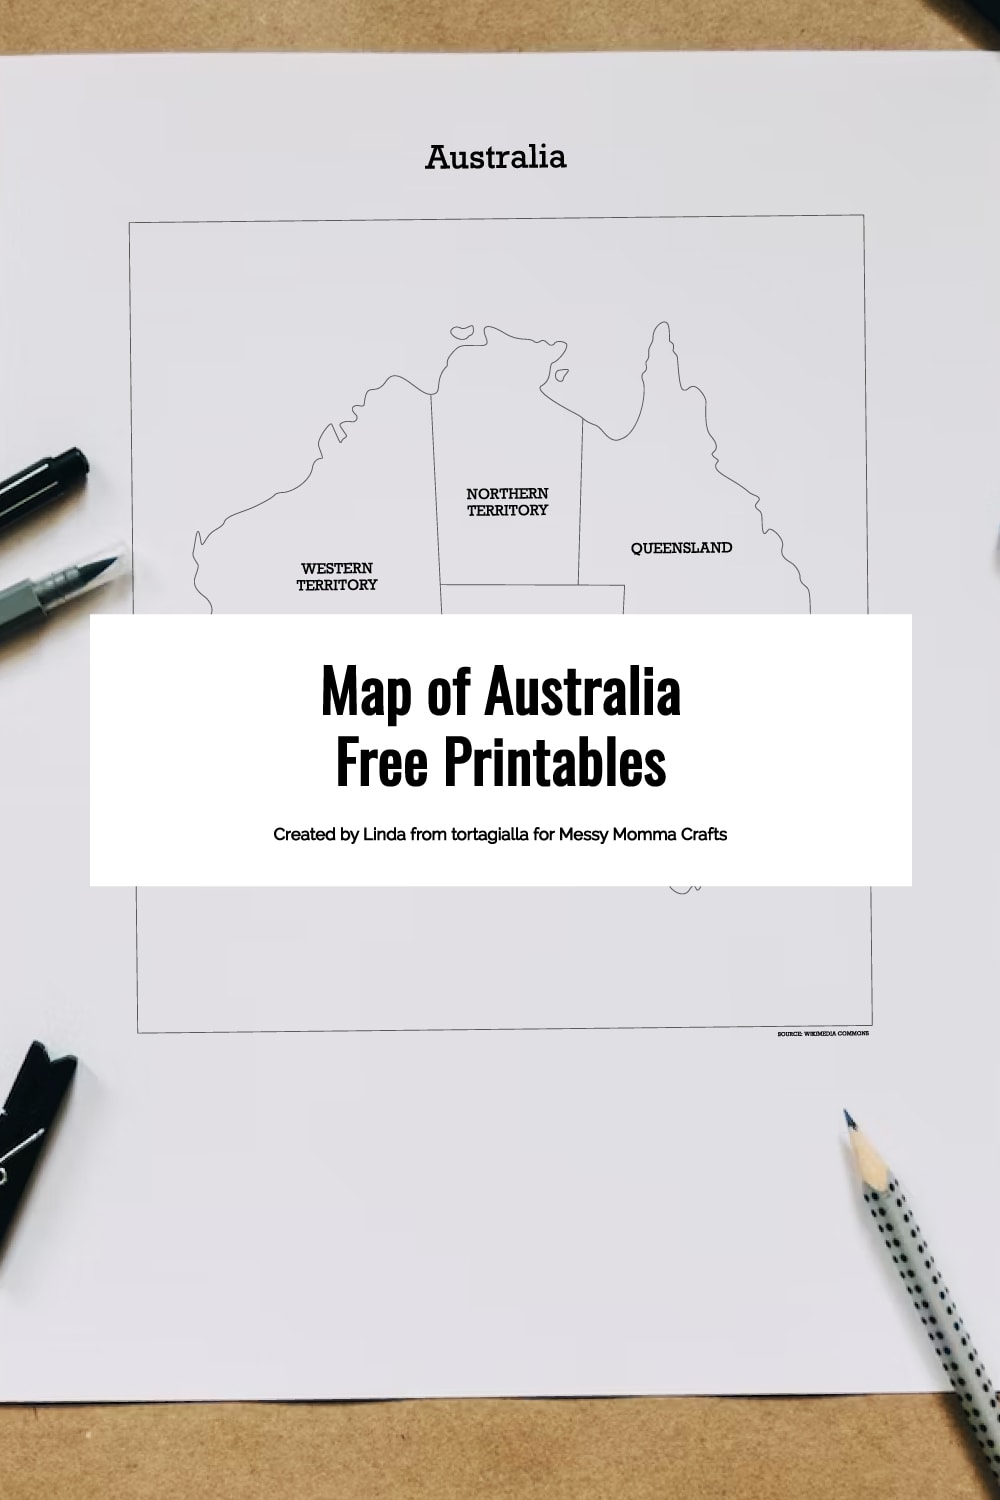 Map of Australia free printables.